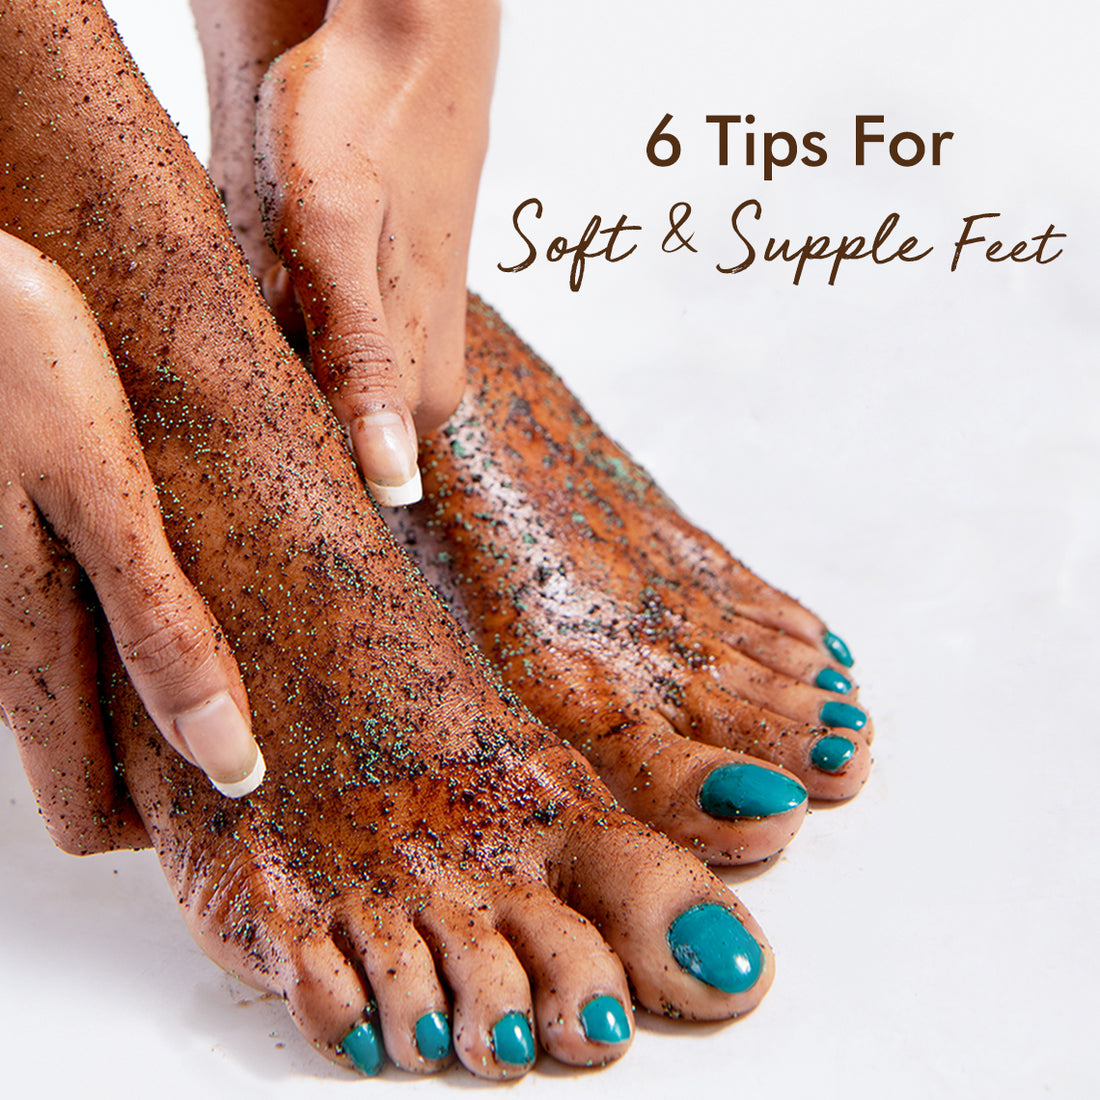 6 Tips for Soft & Supple Feet